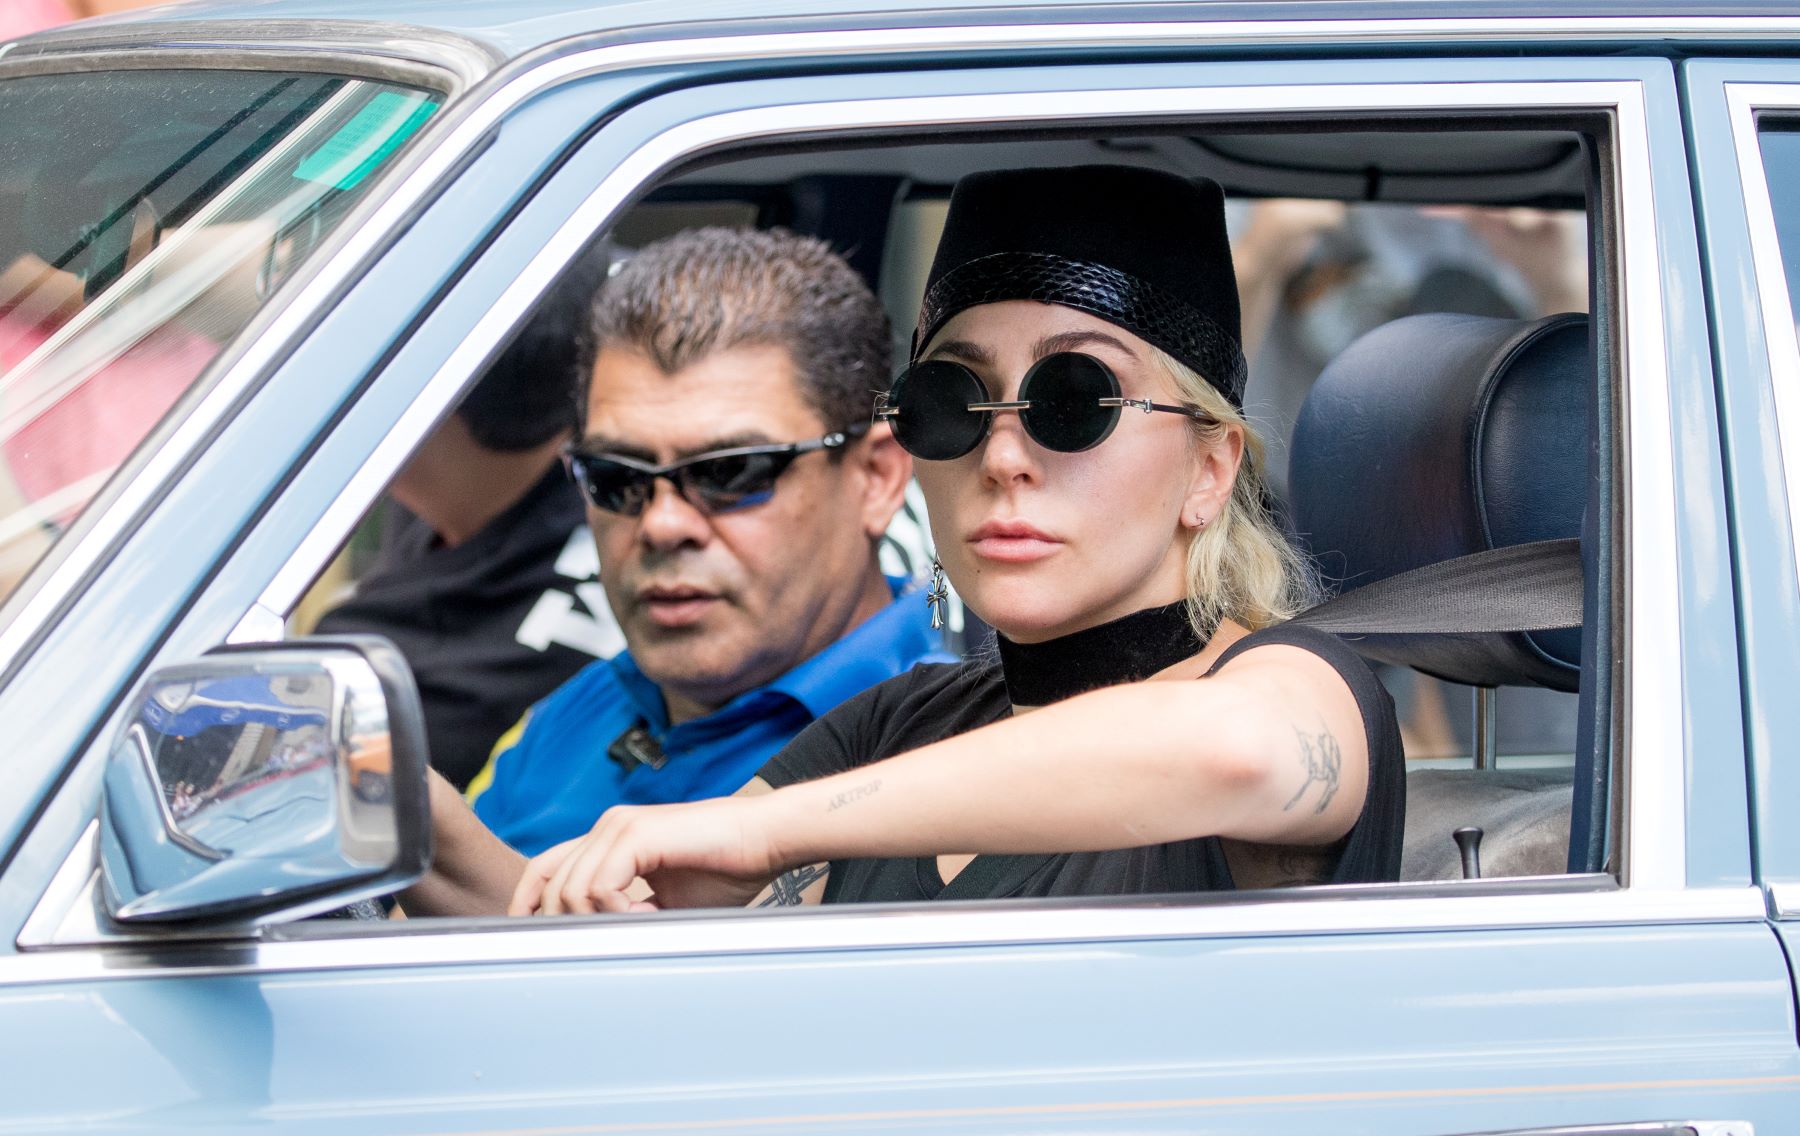 Lady Gaga driving a car in New York City